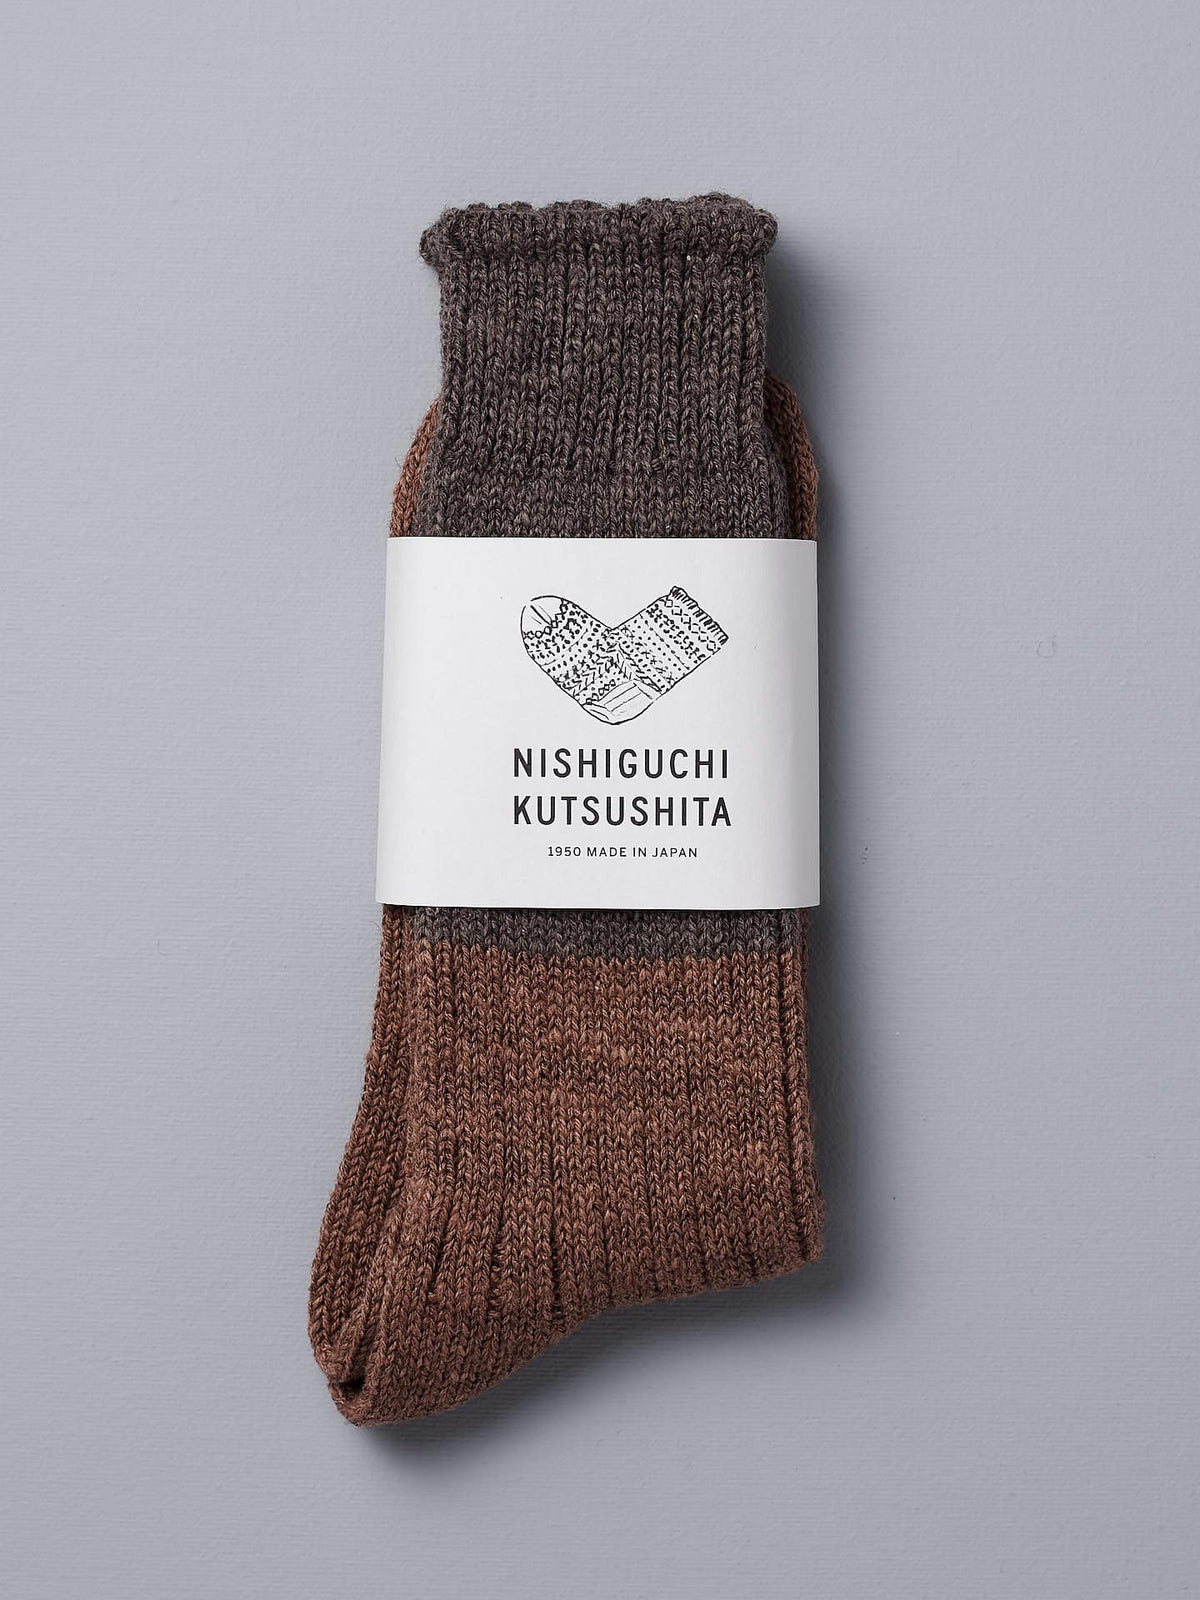 A pair of Boston Slab Socks - Brown Fawn by Nishiguchi Kutsushita.